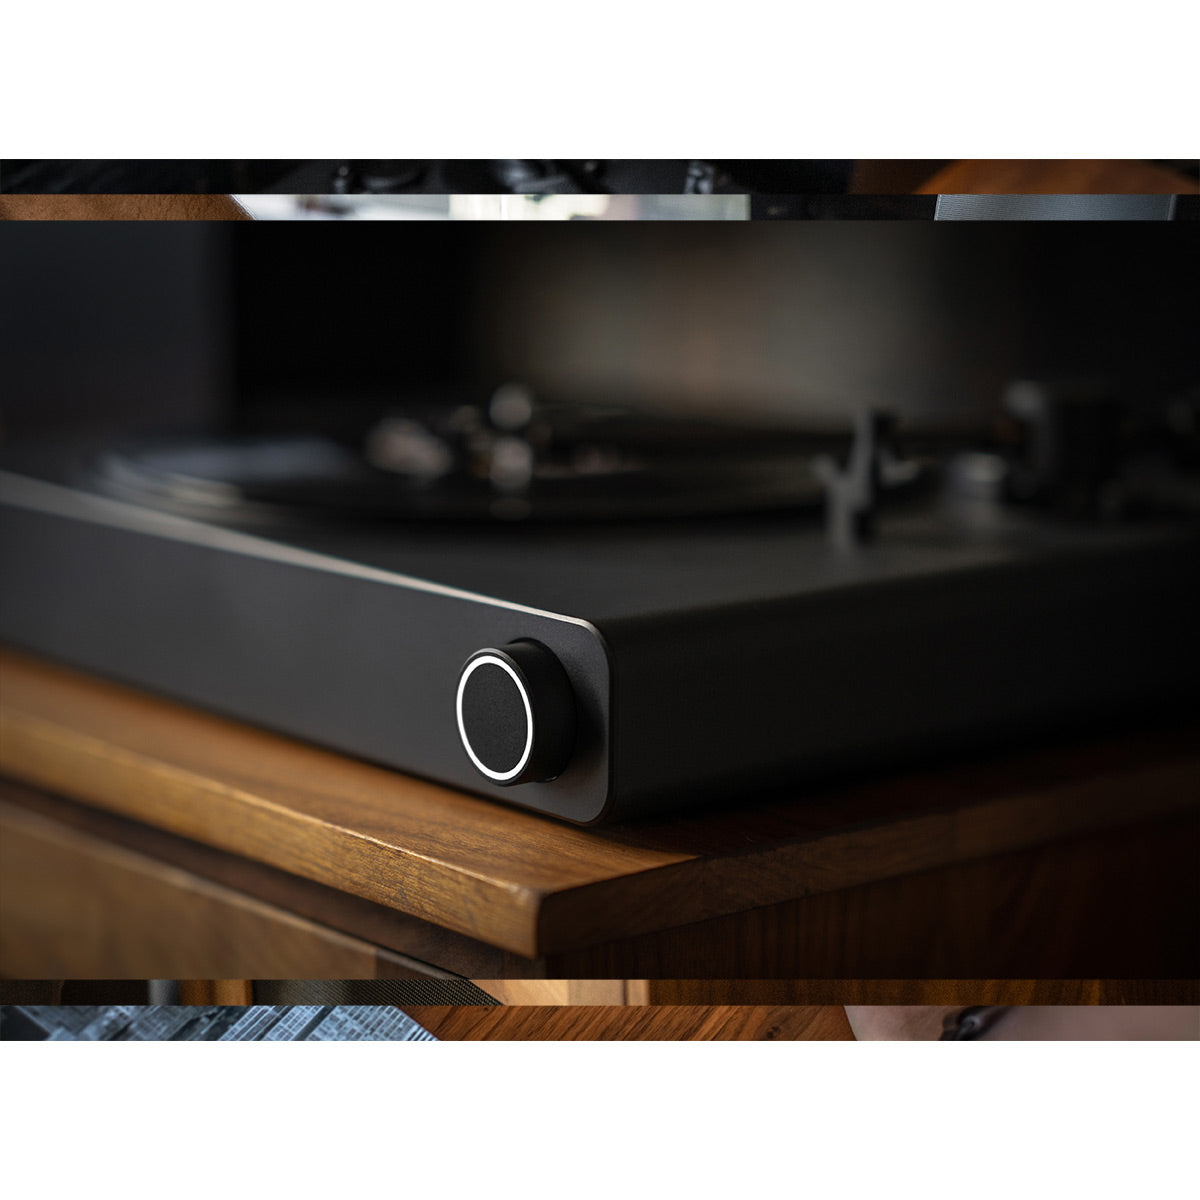 Victrola Stream Onyx Works with Sonos Wireless Turntable with Pair of Sonos Era 300 Wireless Smart Speaker (White)